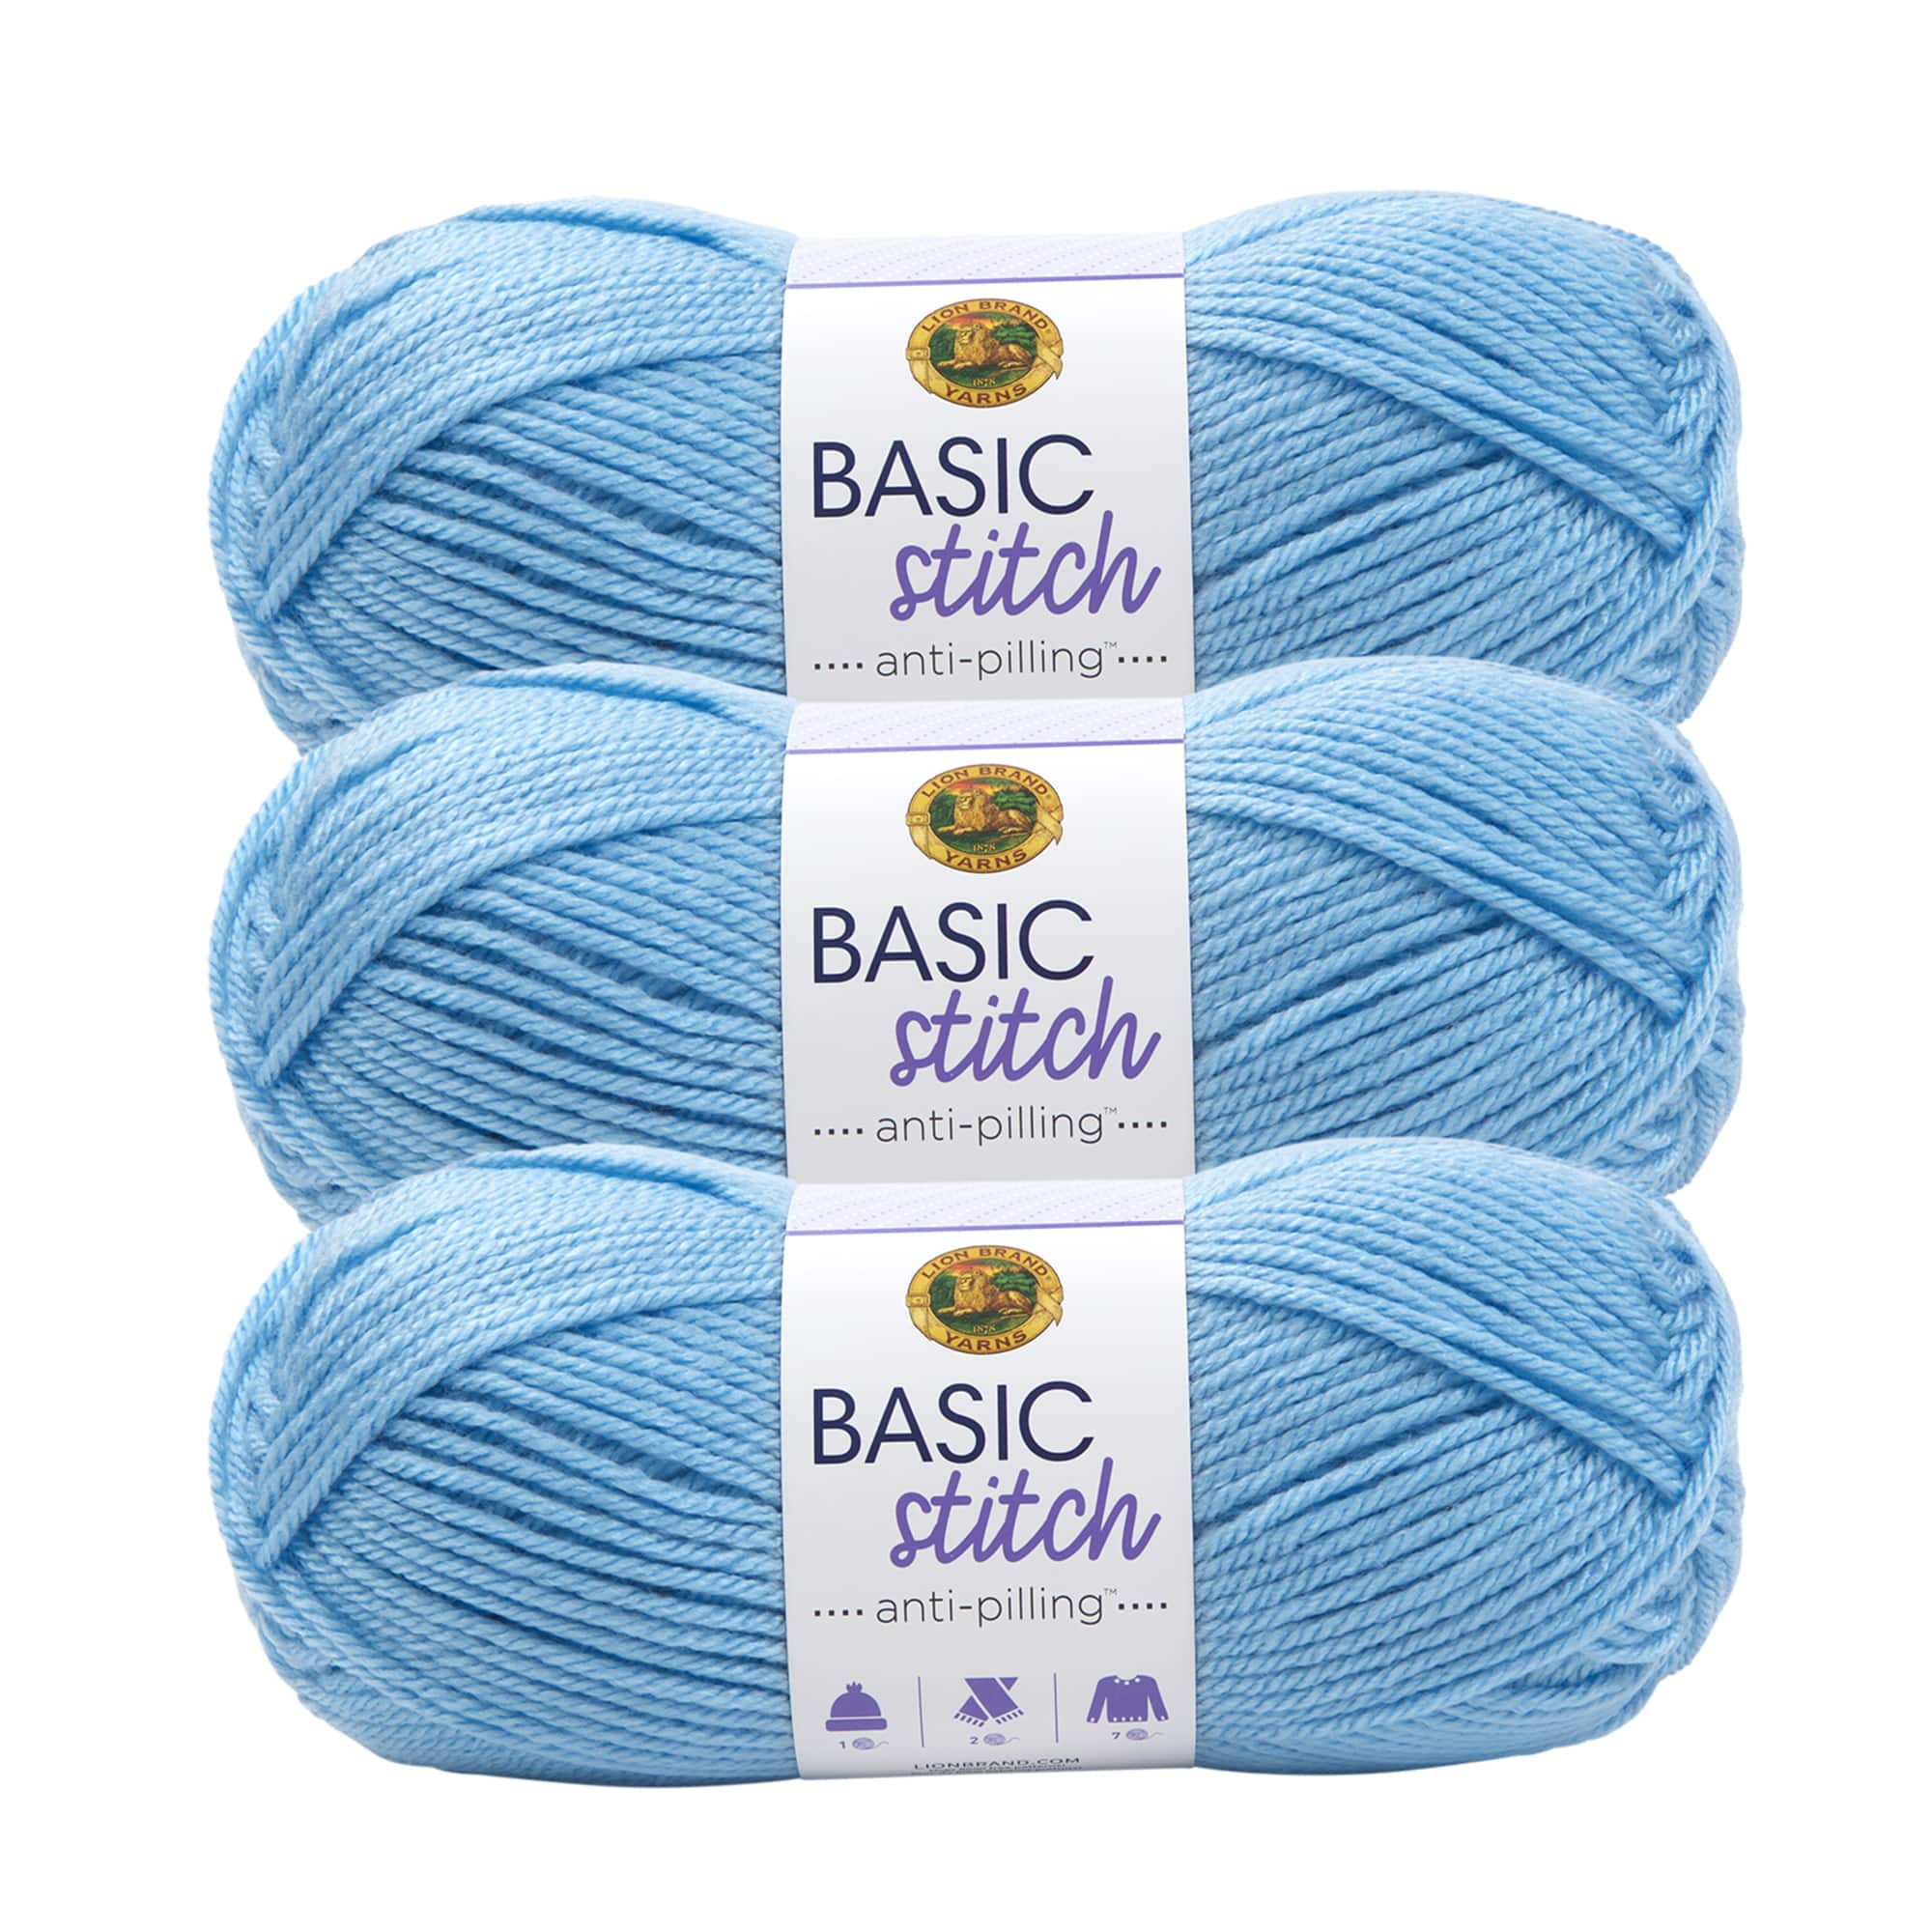 Lion Brand Yarn Basic Stitch Anti-pilling Knitting Yarn, Yarn for Crocheting, 3-Pack, Sage